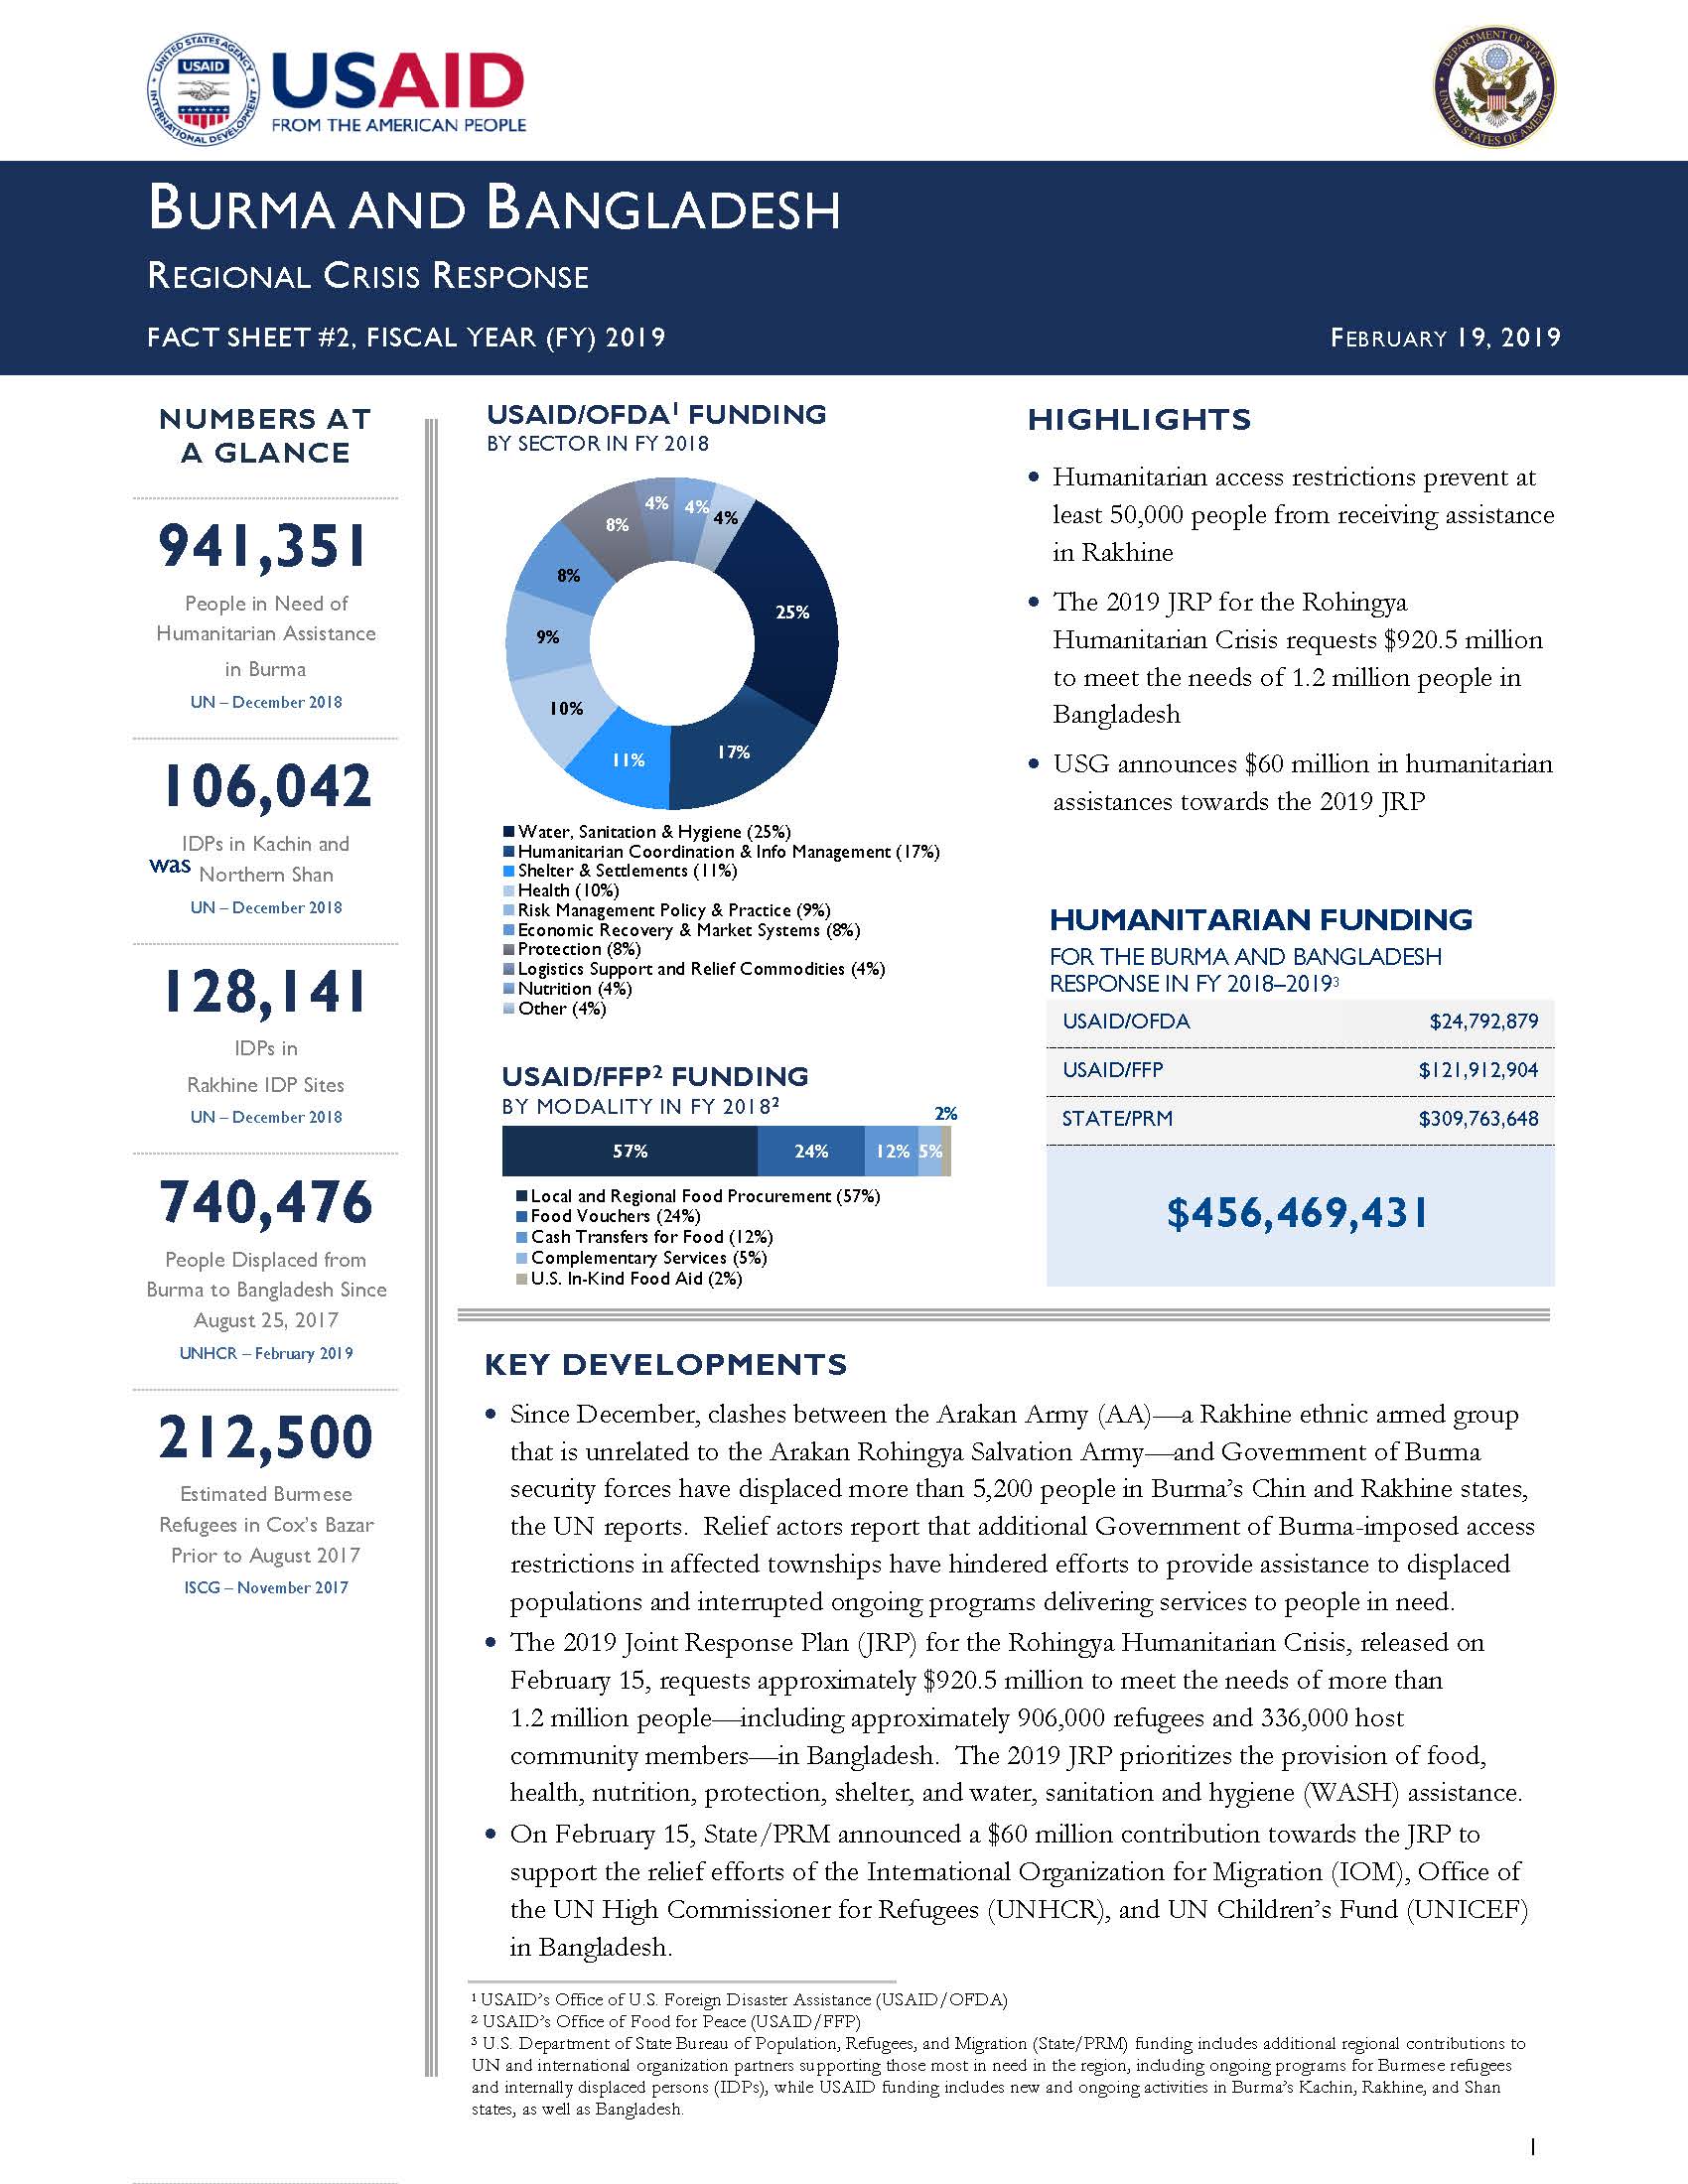 USAID-DCHA Burma and Bangladesh Regional Crisis Response Fact Sheet